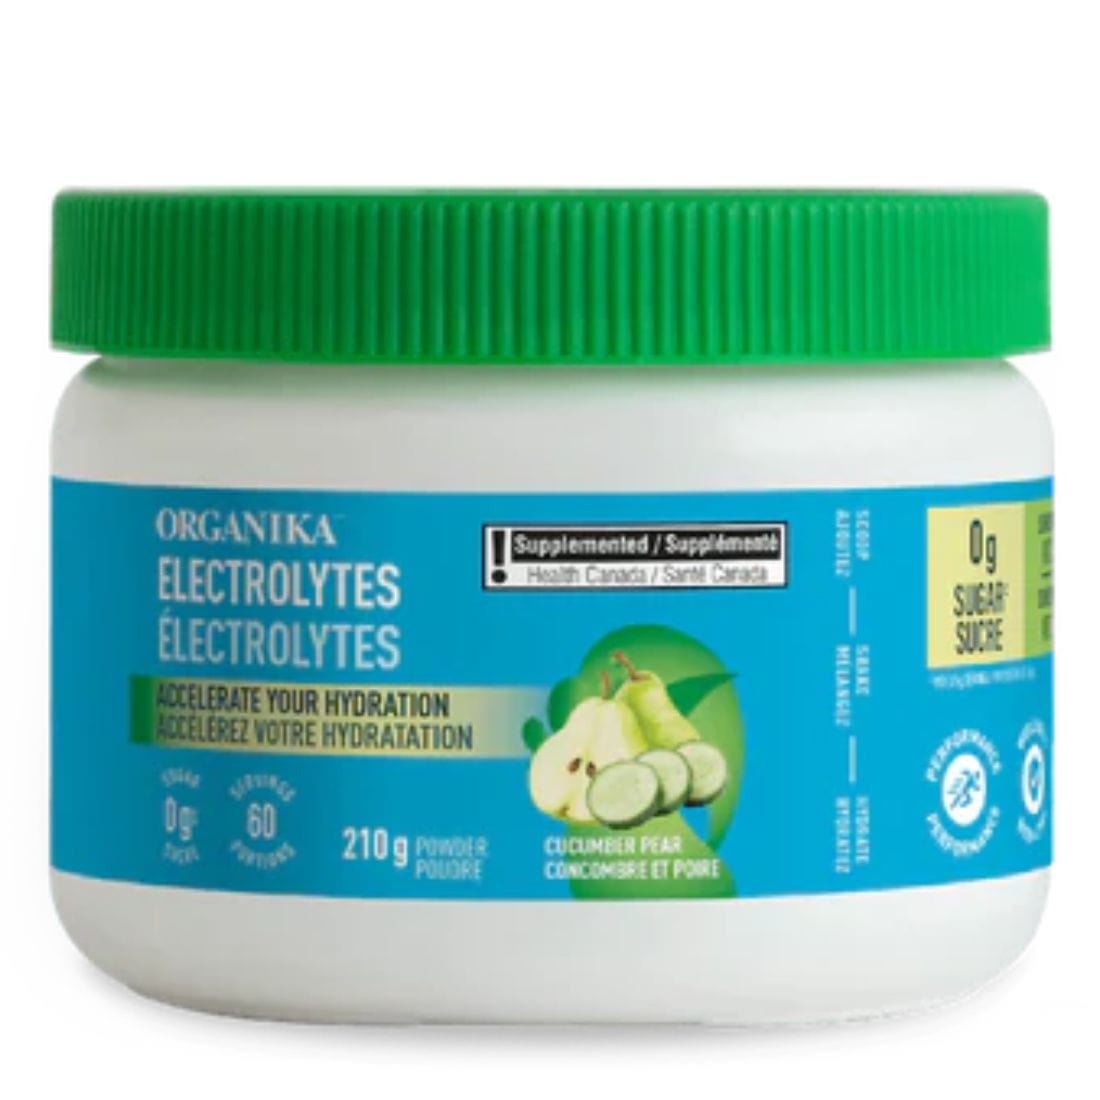 organika-electrolytes-cucumber-pear-210g